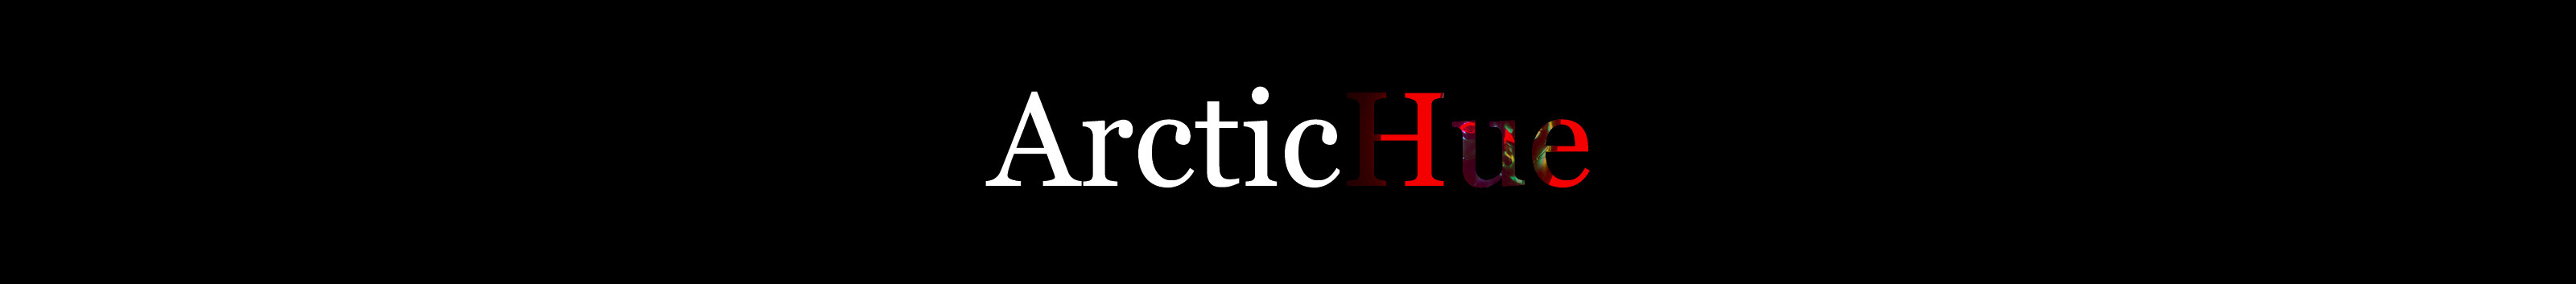 Arctic Hue's profile banner